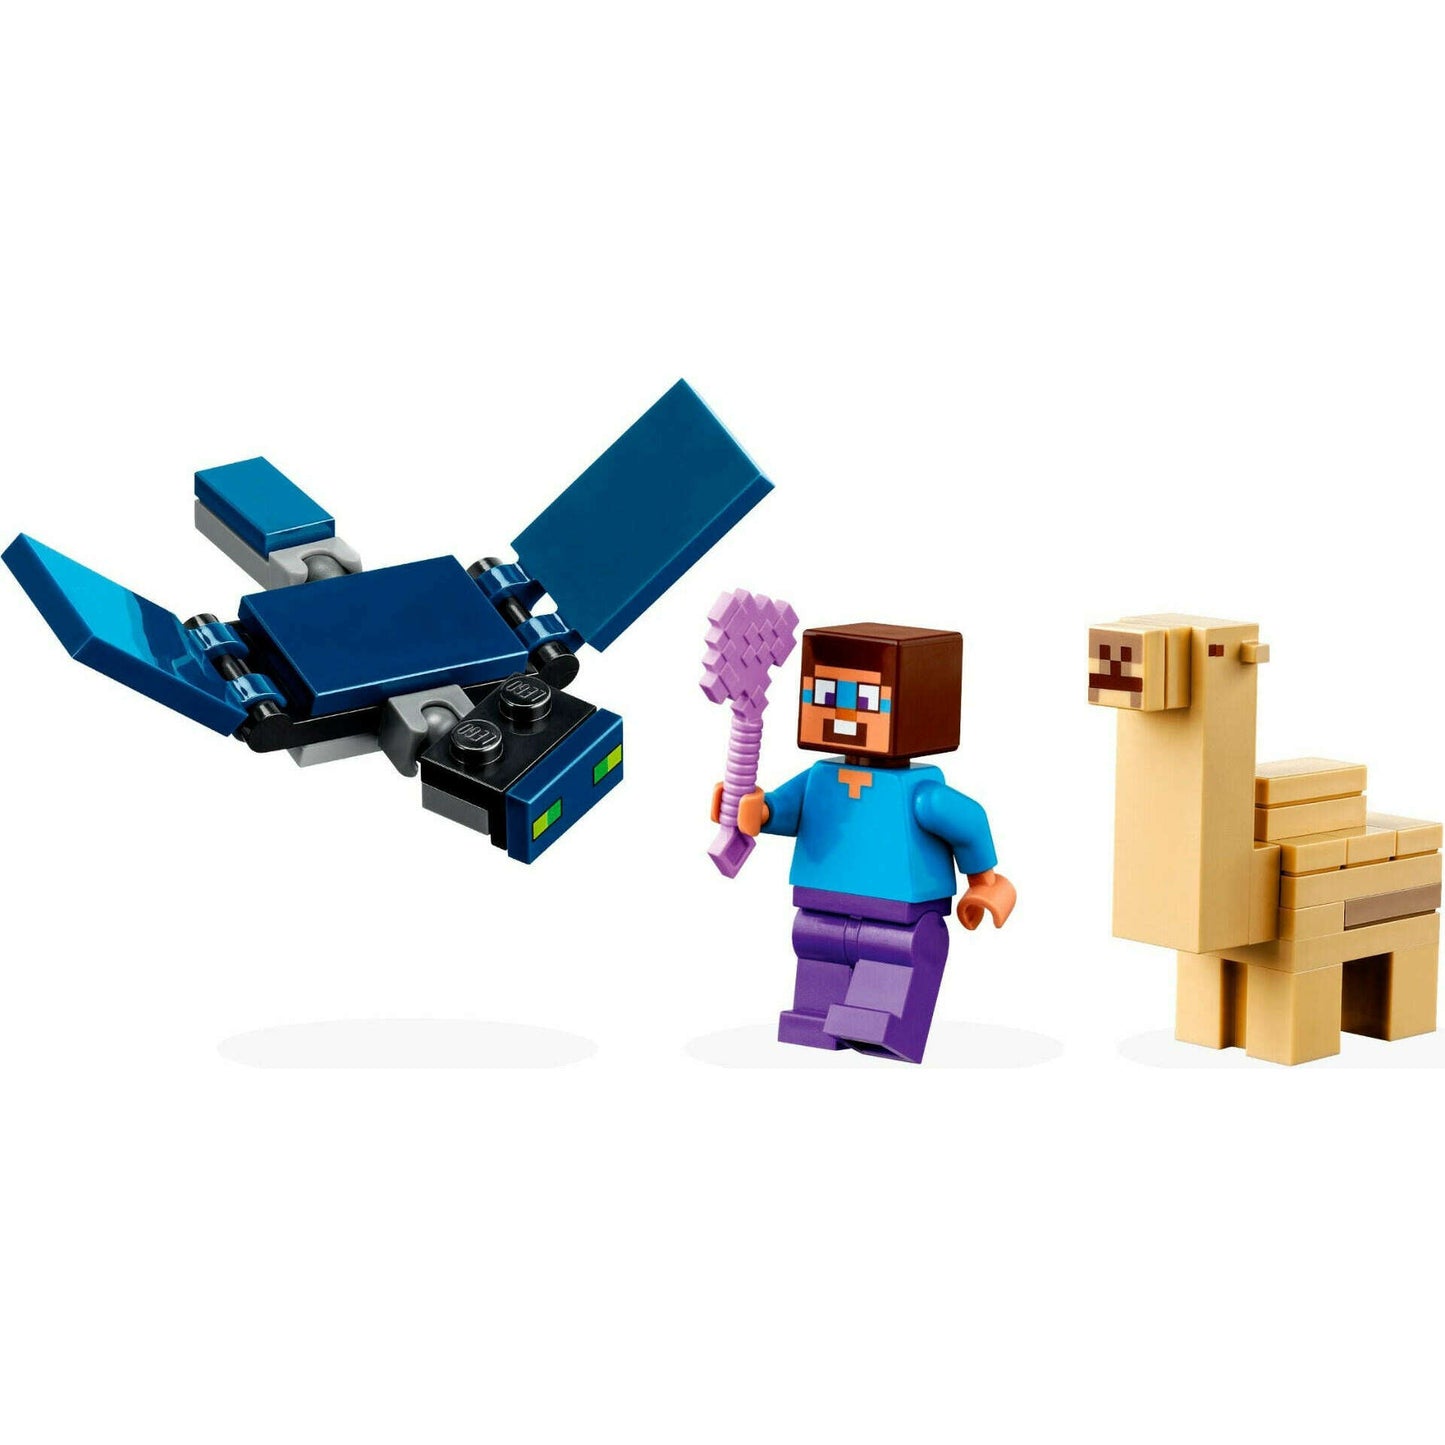 Toys N Tuck:Lego 21251 Minecraft Steve's Desert Expedition,Lego Minecraft